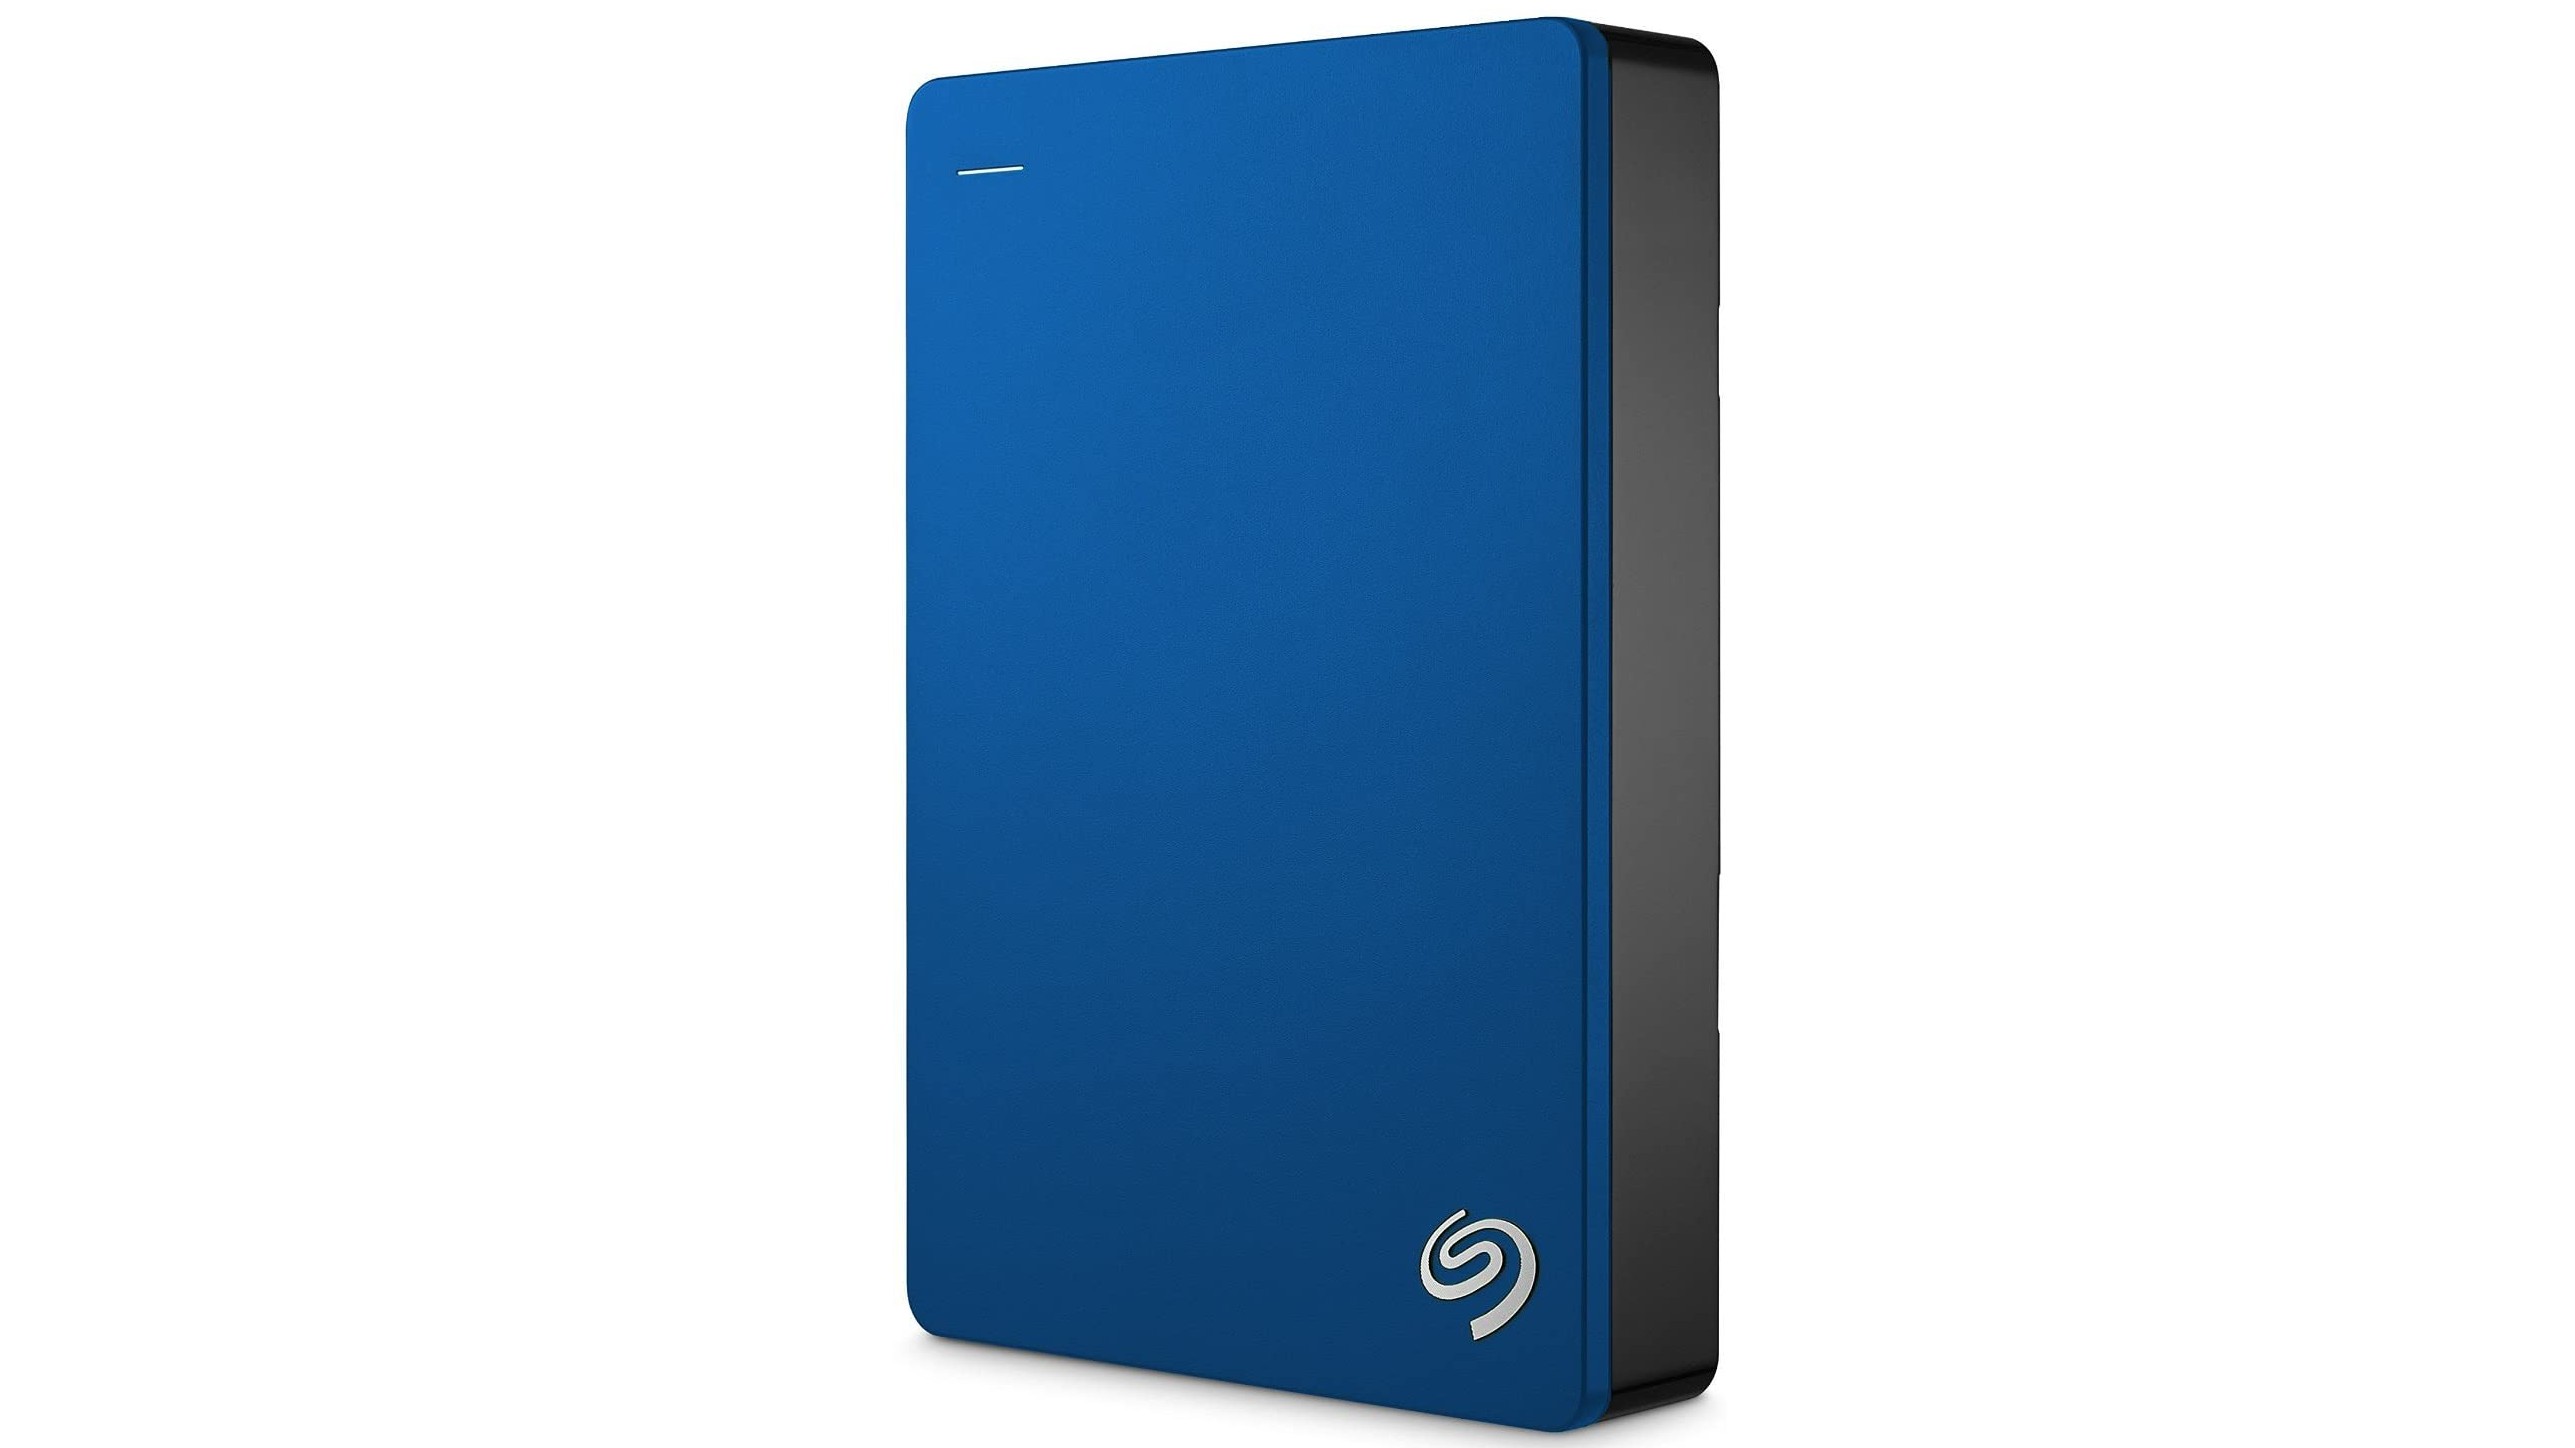 Seagate 5 TB Backup Plus hard drive